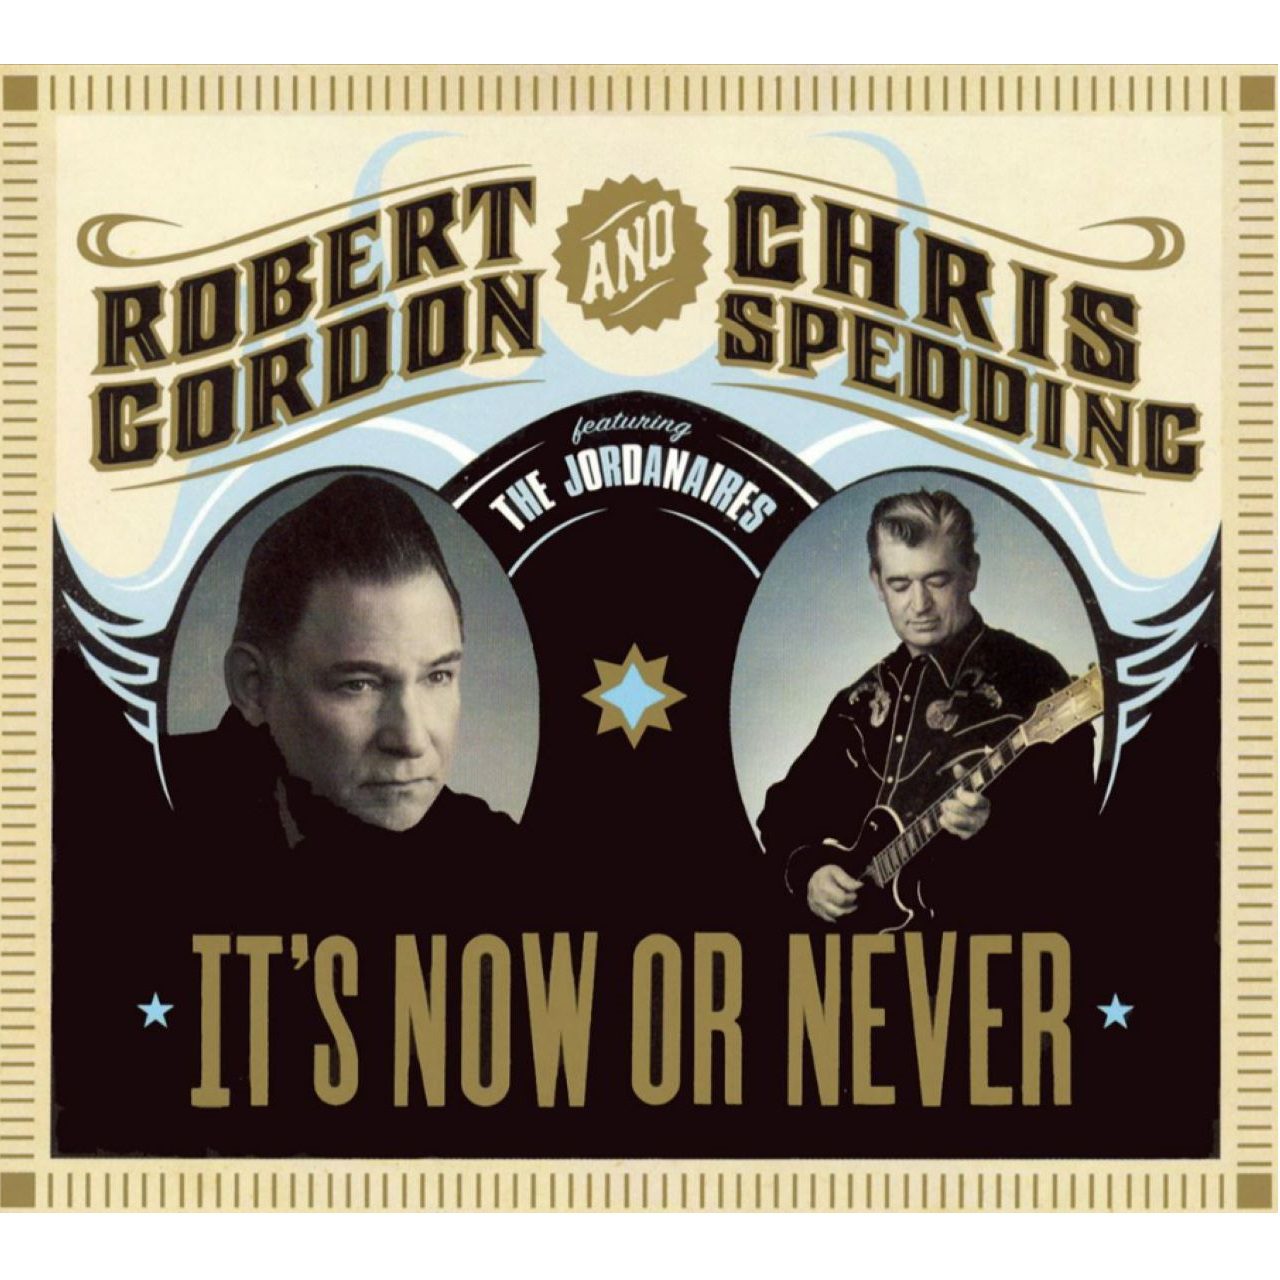 Robert Gordon & Chris Spedding - It's Now Or Never cover album